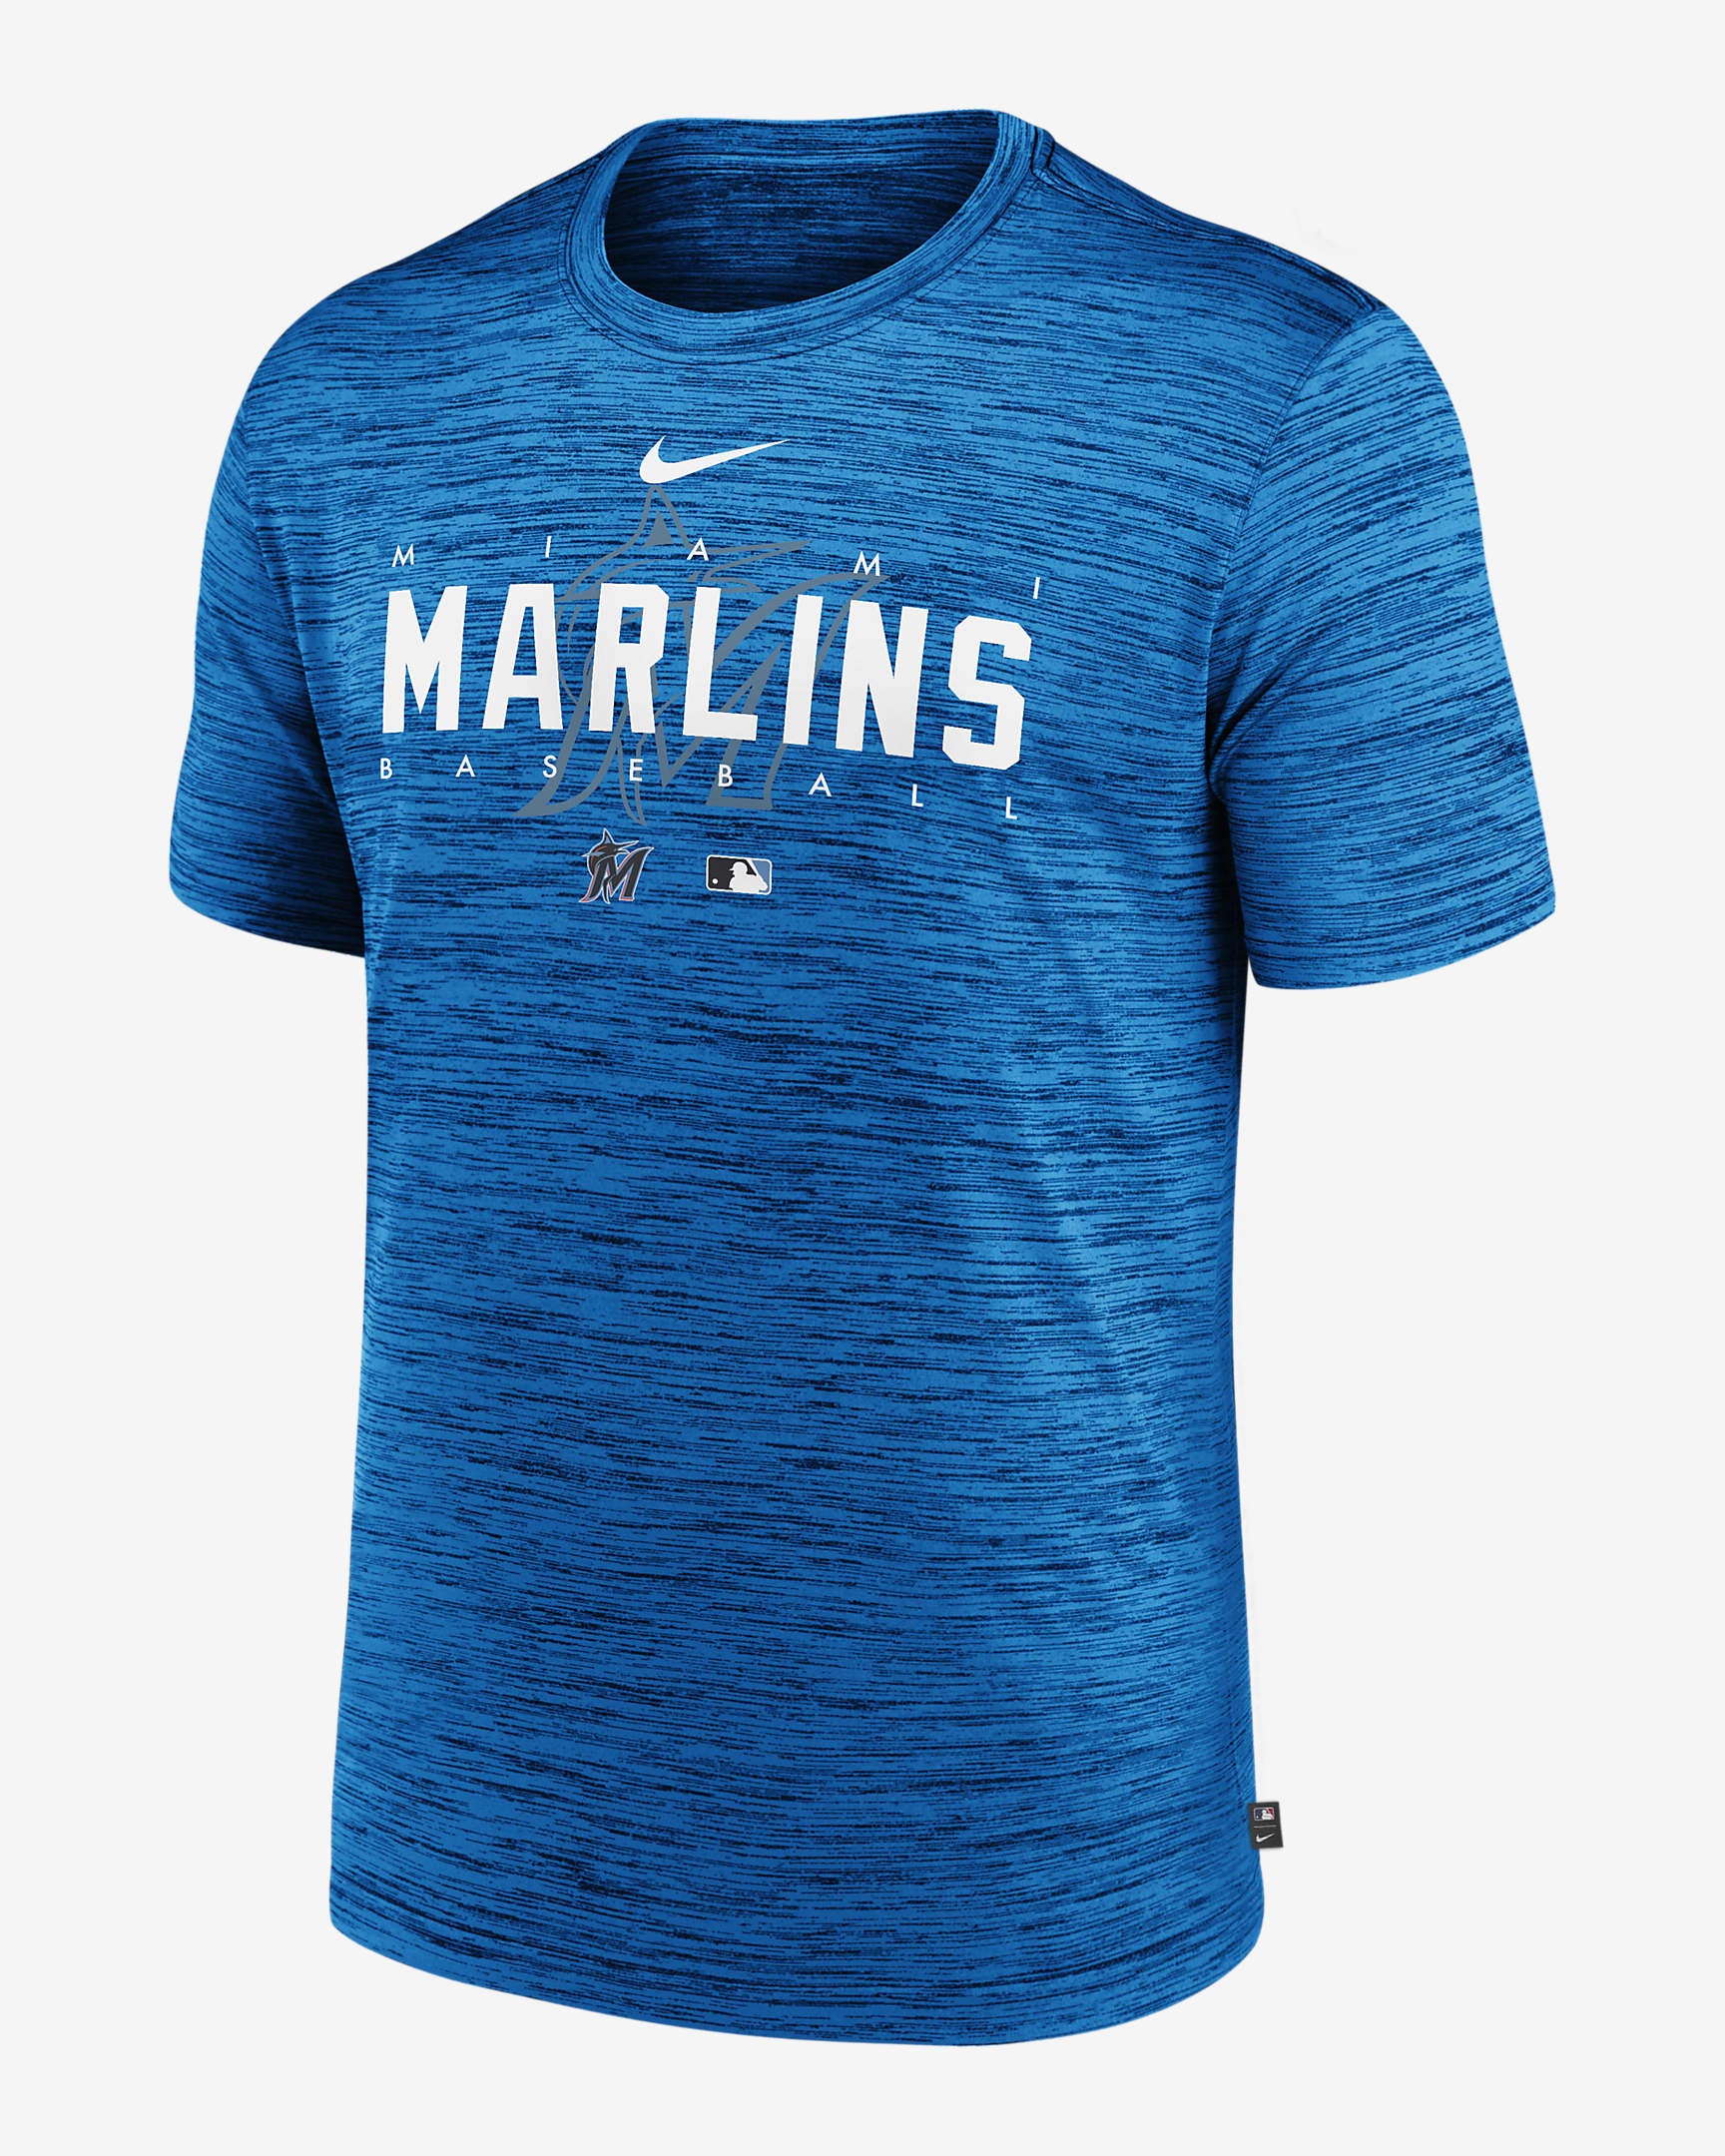 Nike Dri-FIT Velocity Practice (MLB Miami Marlins) Men's T-Shirt. Nike.com